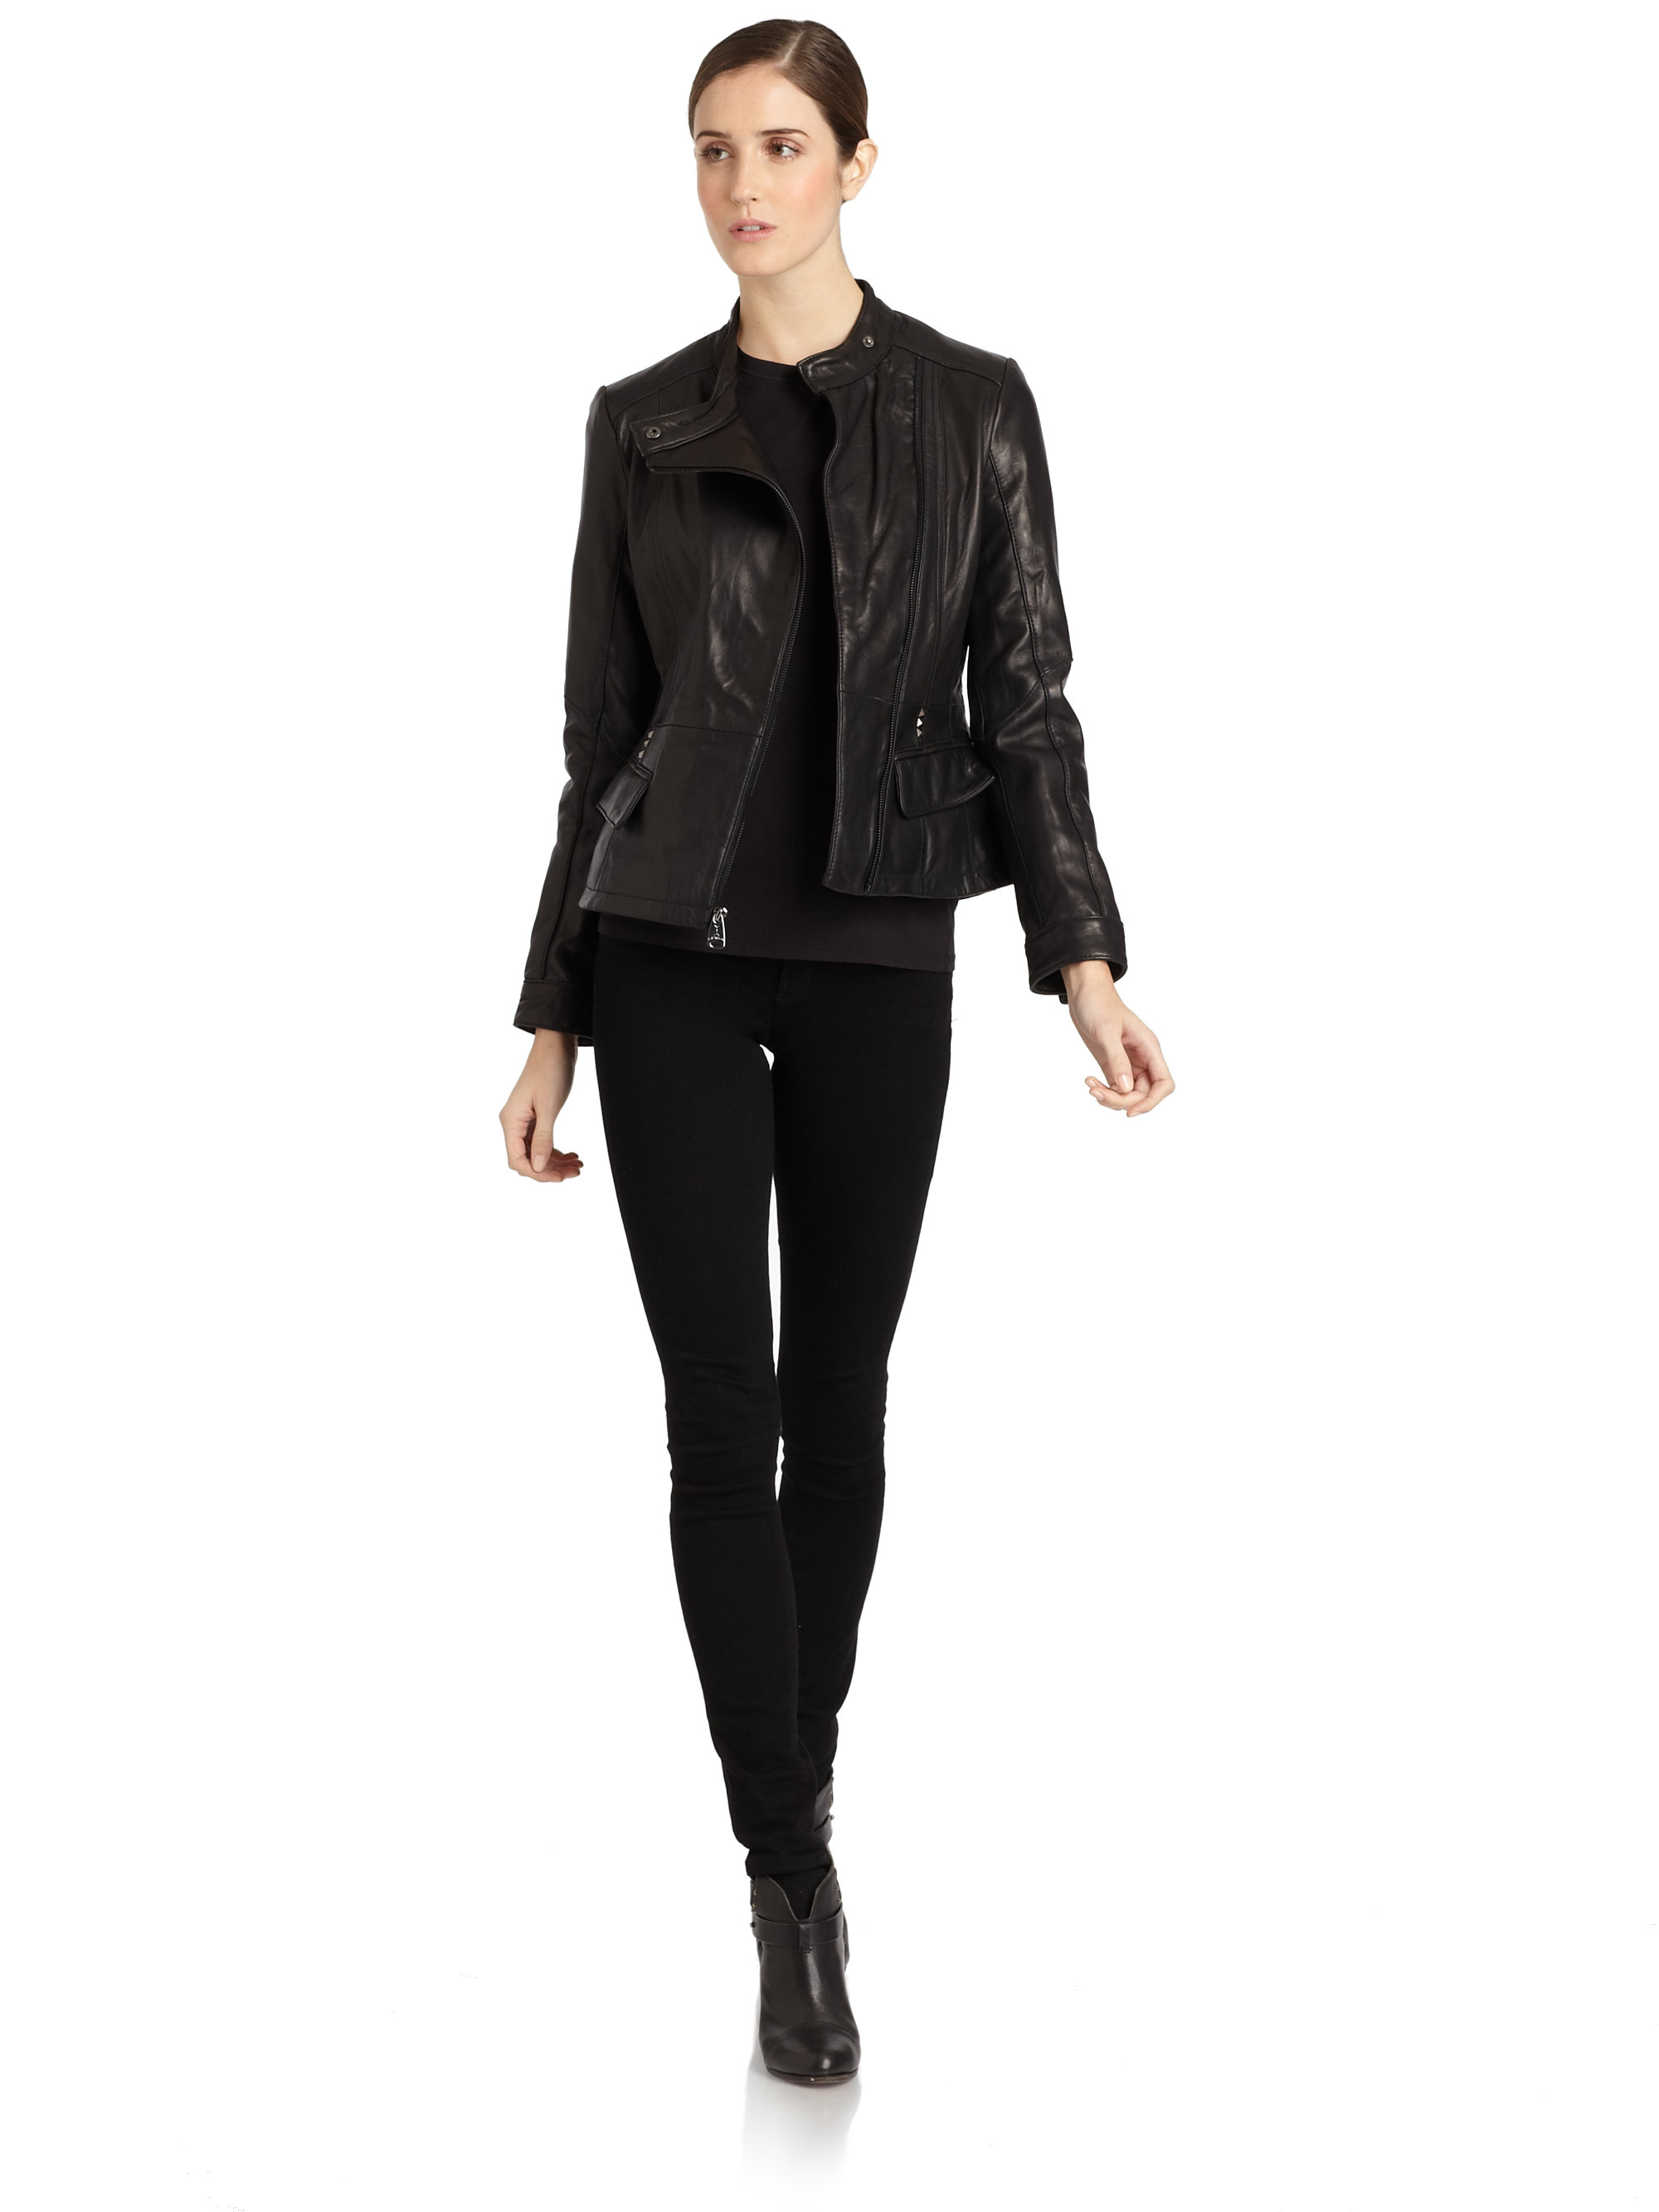 Lyst - Via spiga Leather Moto Jacket in Black